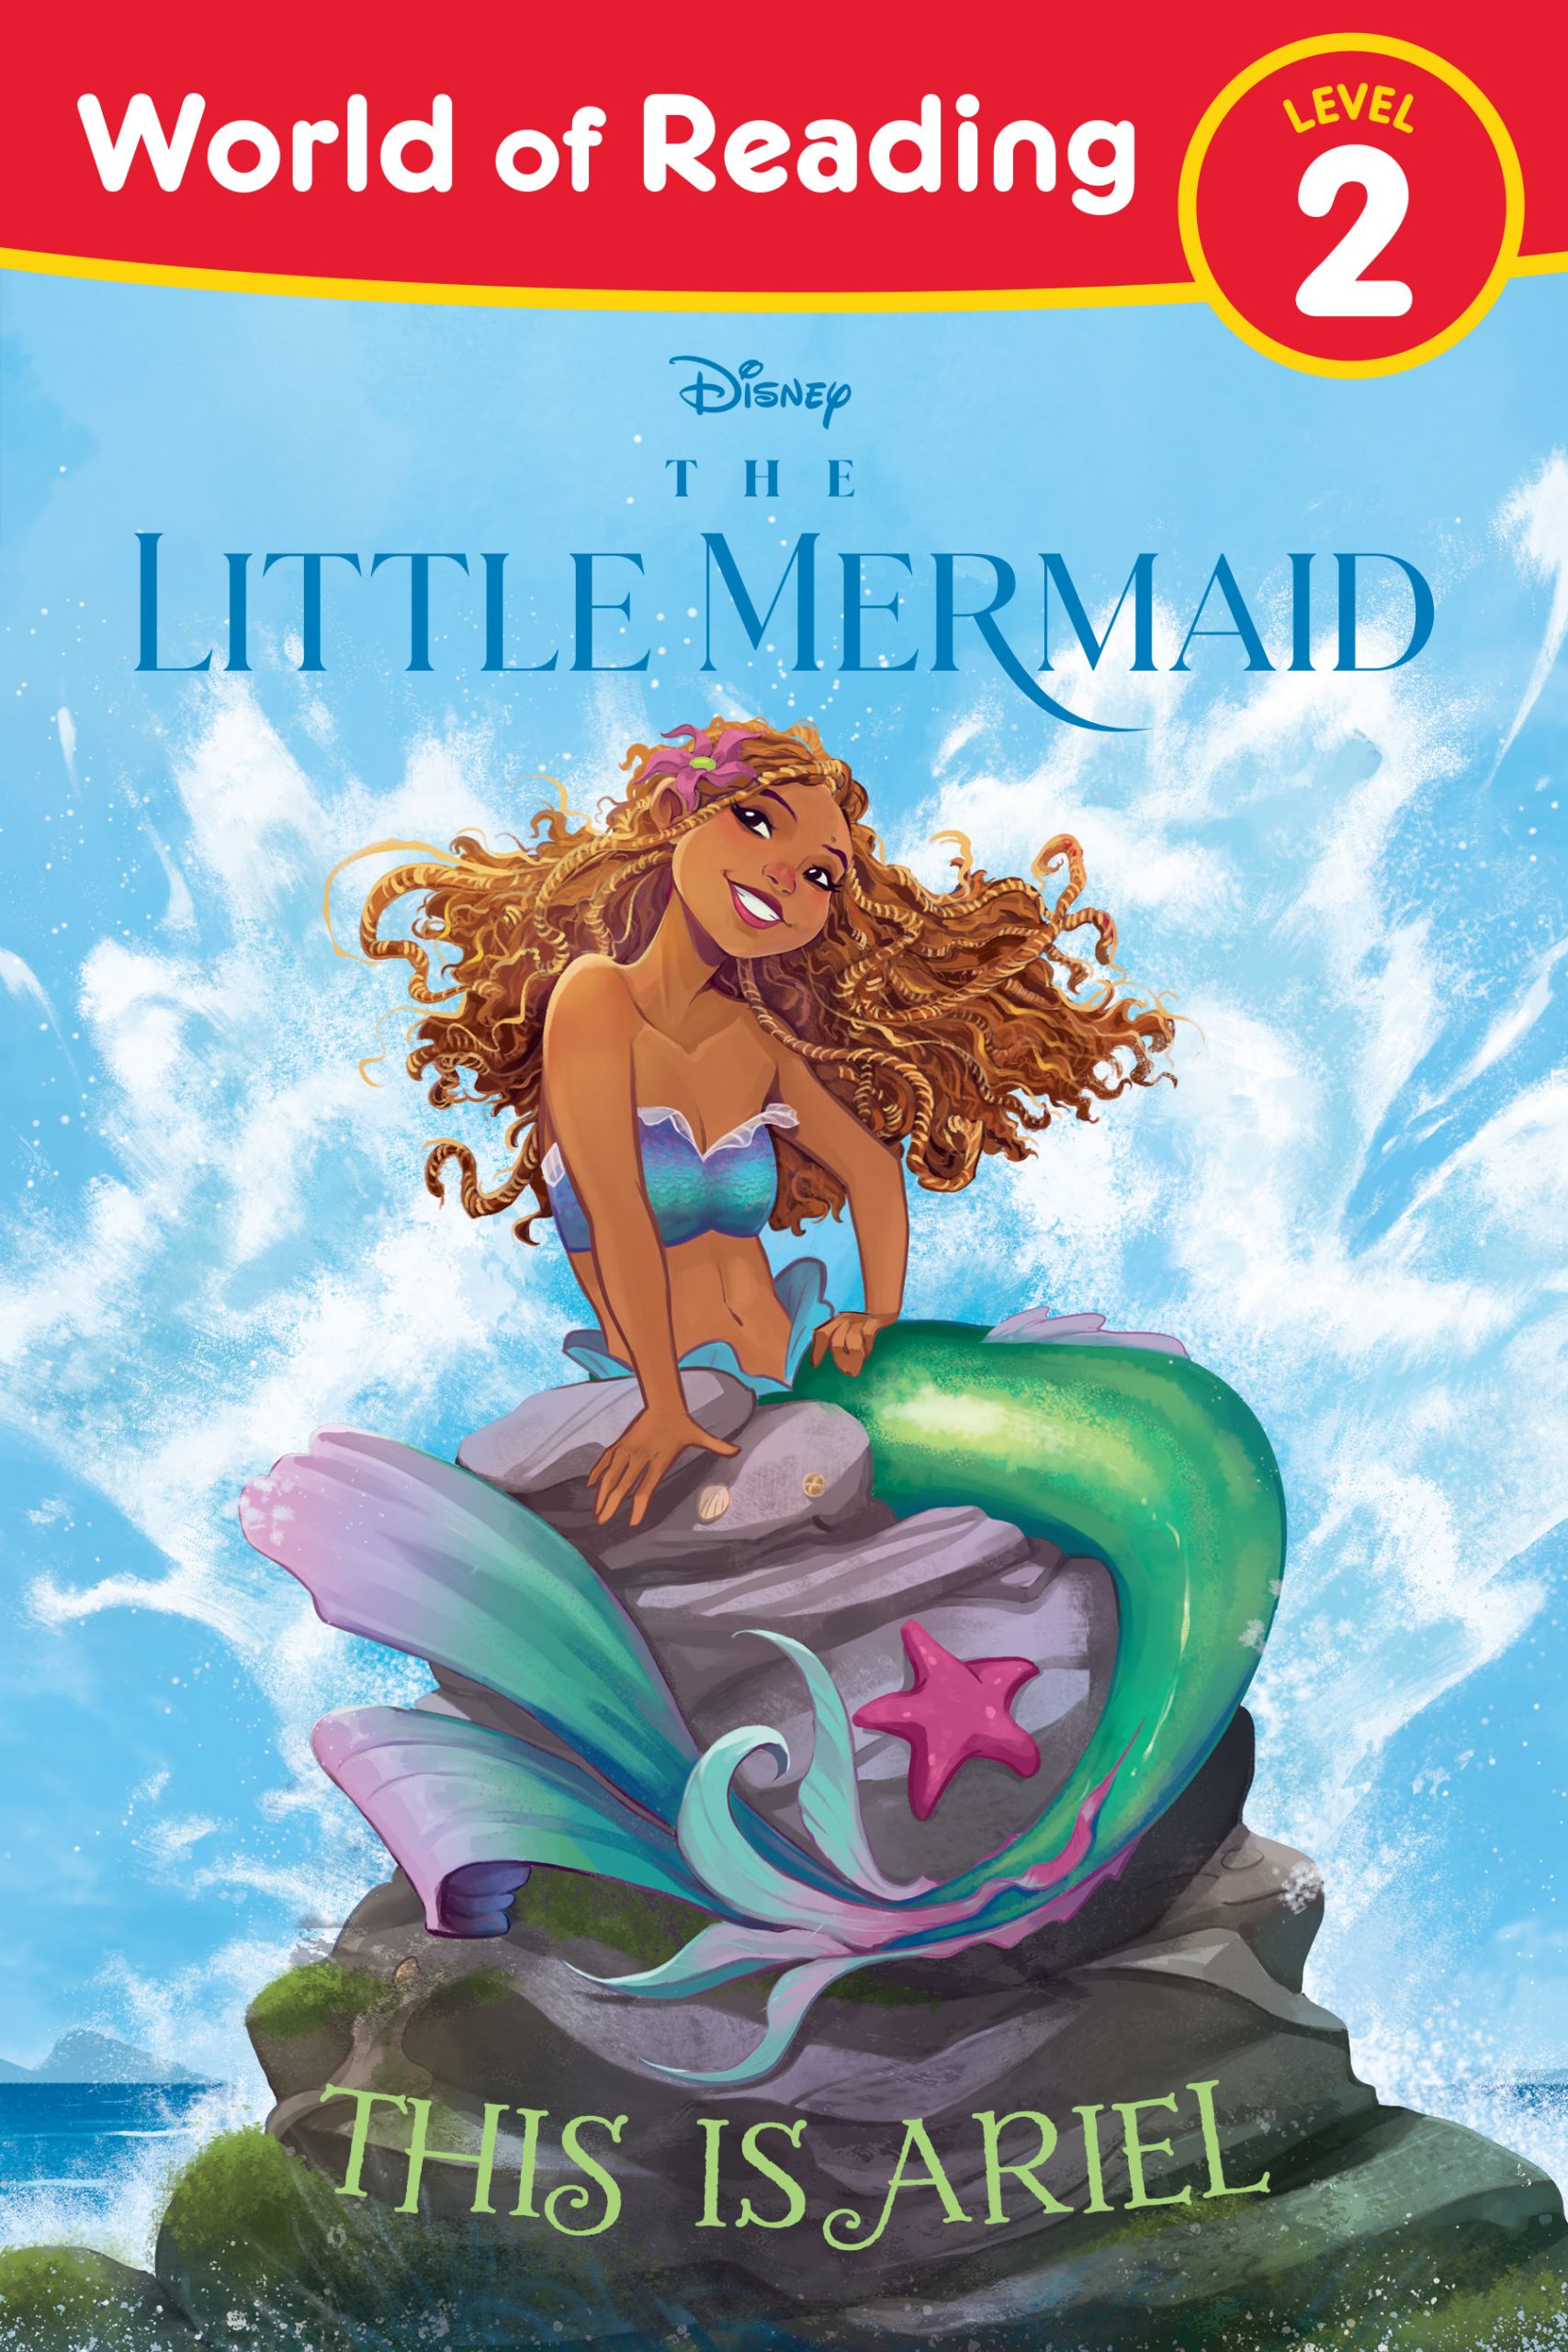 The Little Mermaid Live Action Novelization By Faith Noelle, 46% OFF